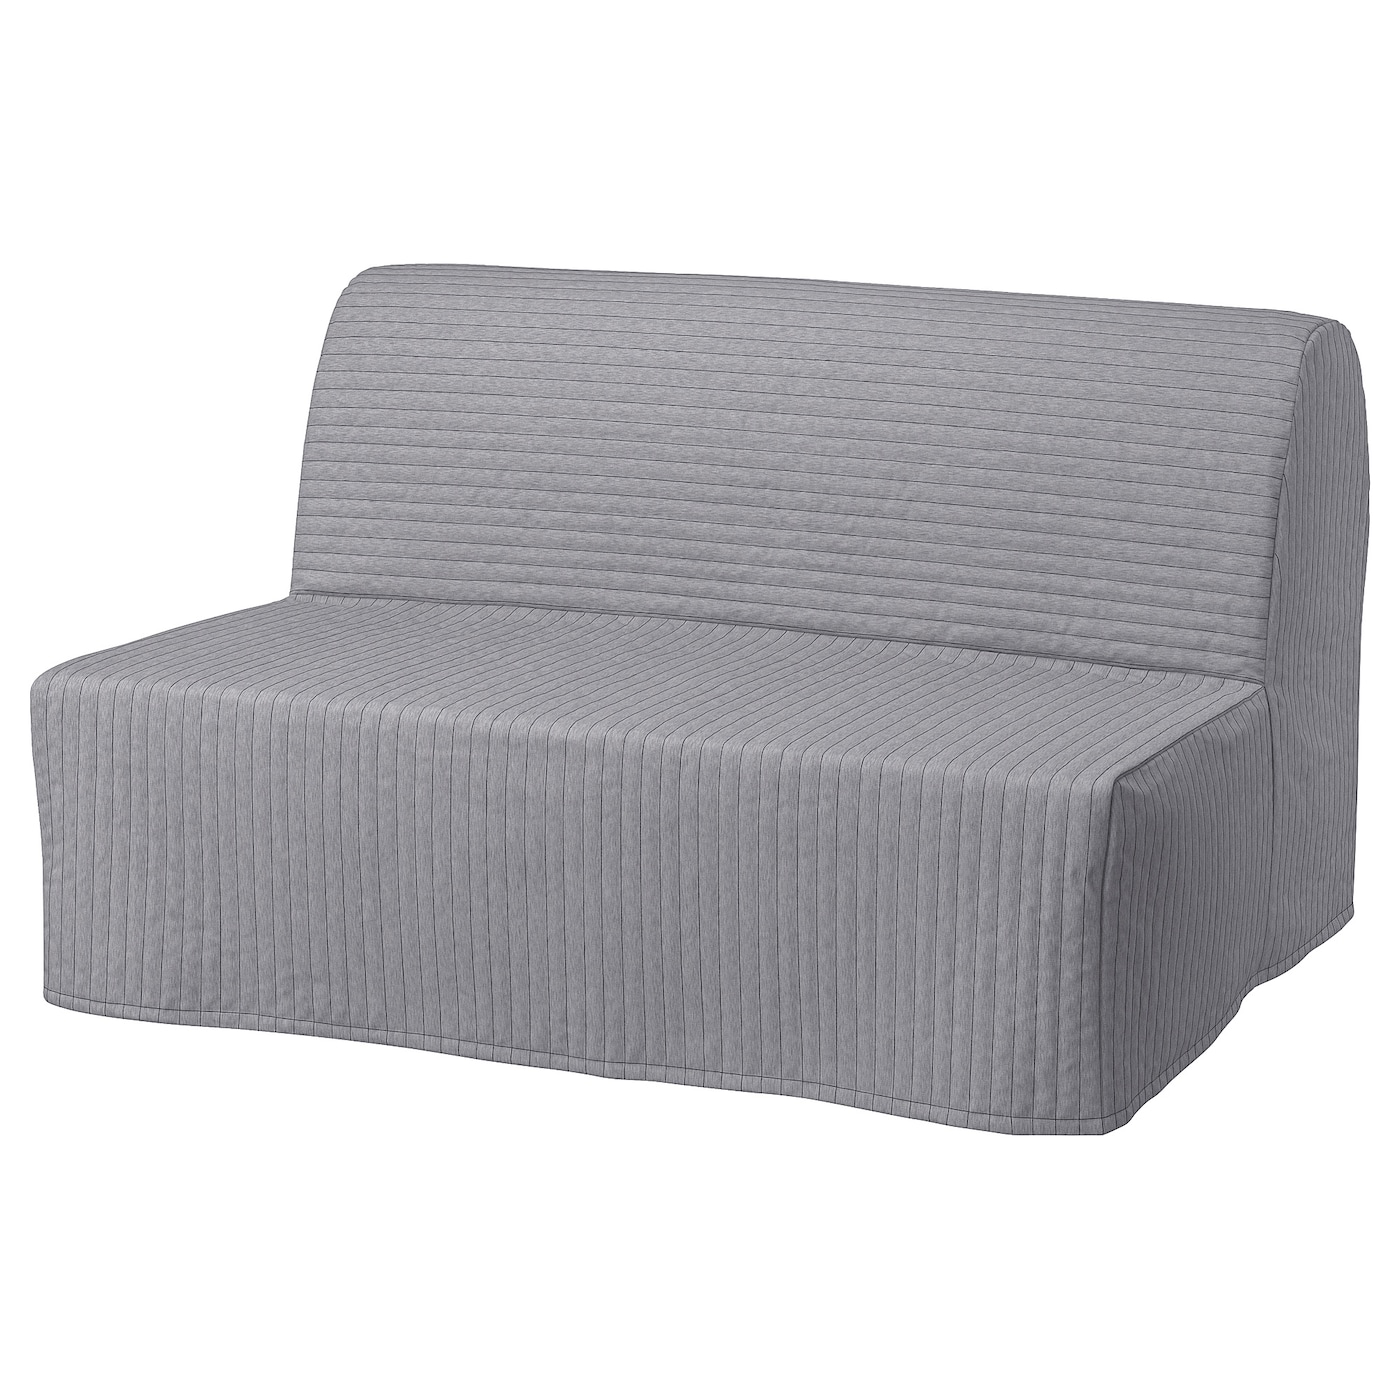 2-местный диван-кровать - IKEA LYCKSELE MURBO/ЛИКСЕЛЕ МУРБО ИКЕА, 87х100х142 см, серый